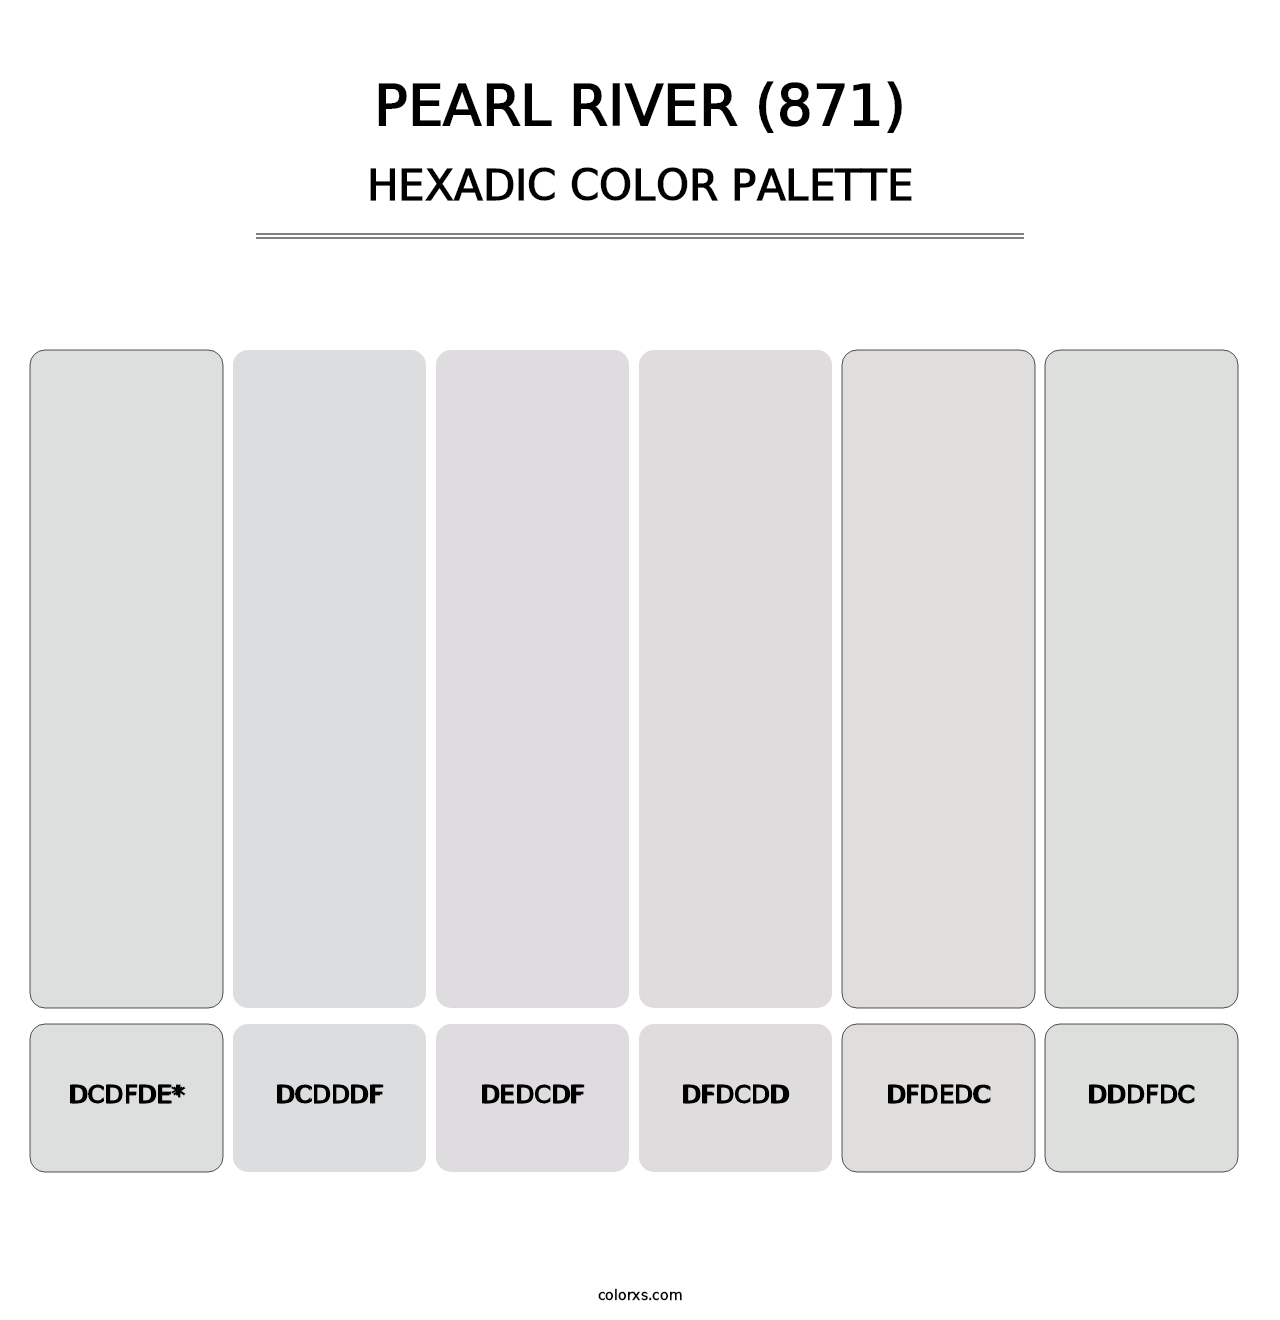 Pearl River (871) - Hexadic Color Palette